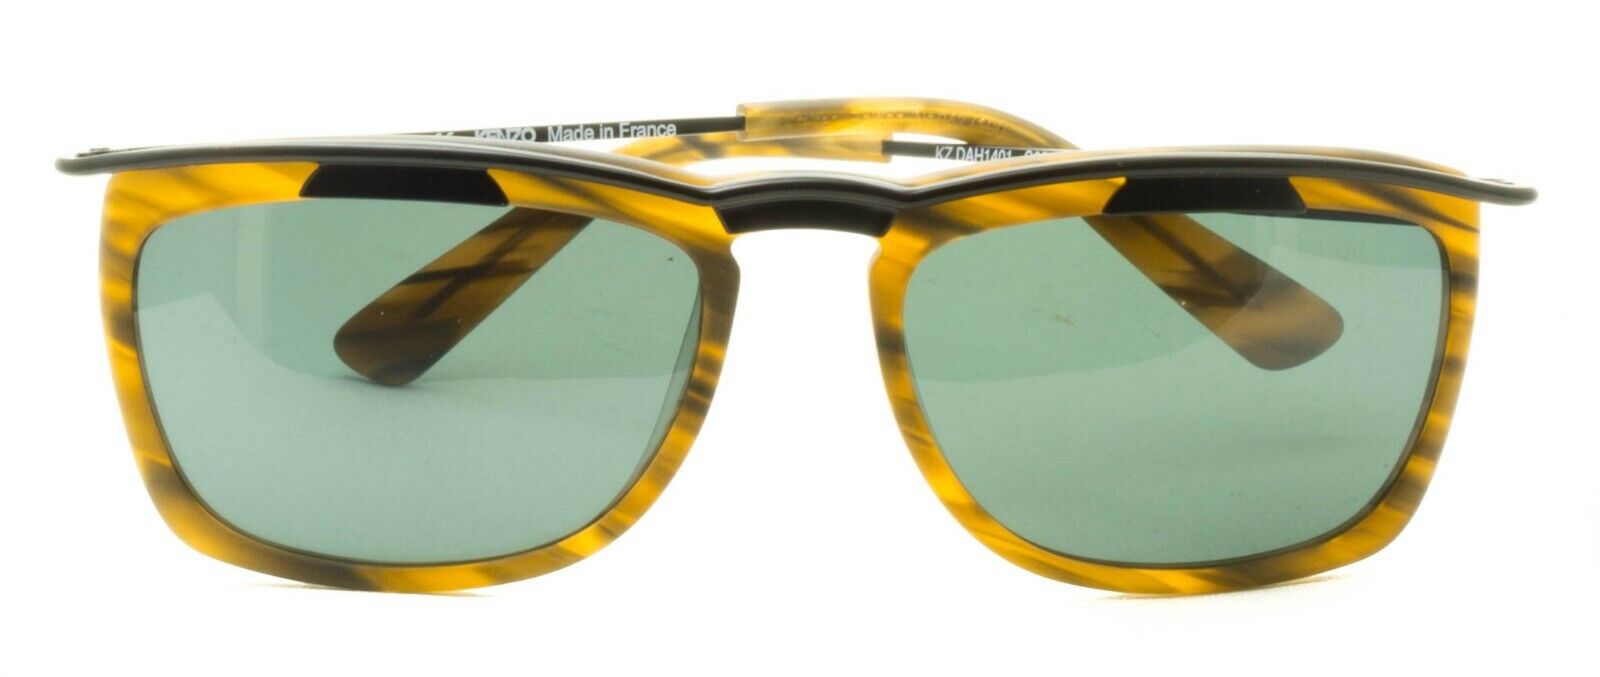 KENZO K7 DAH1401 C02 56mm Sunglasses Shades Eyeglasses Glasses France - New